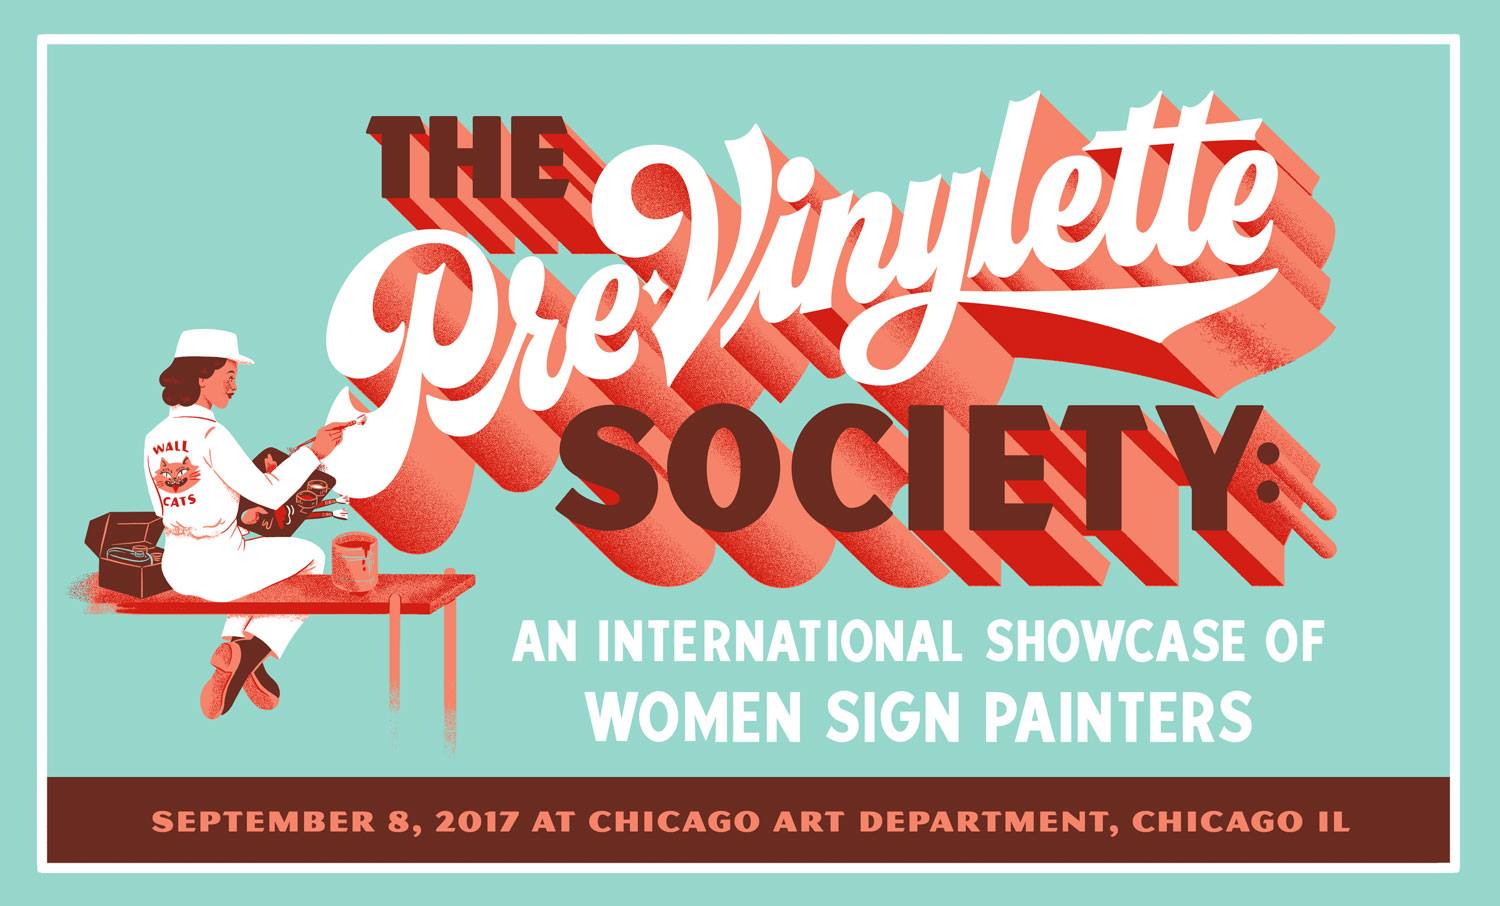 The PreVinylette Society exhibition